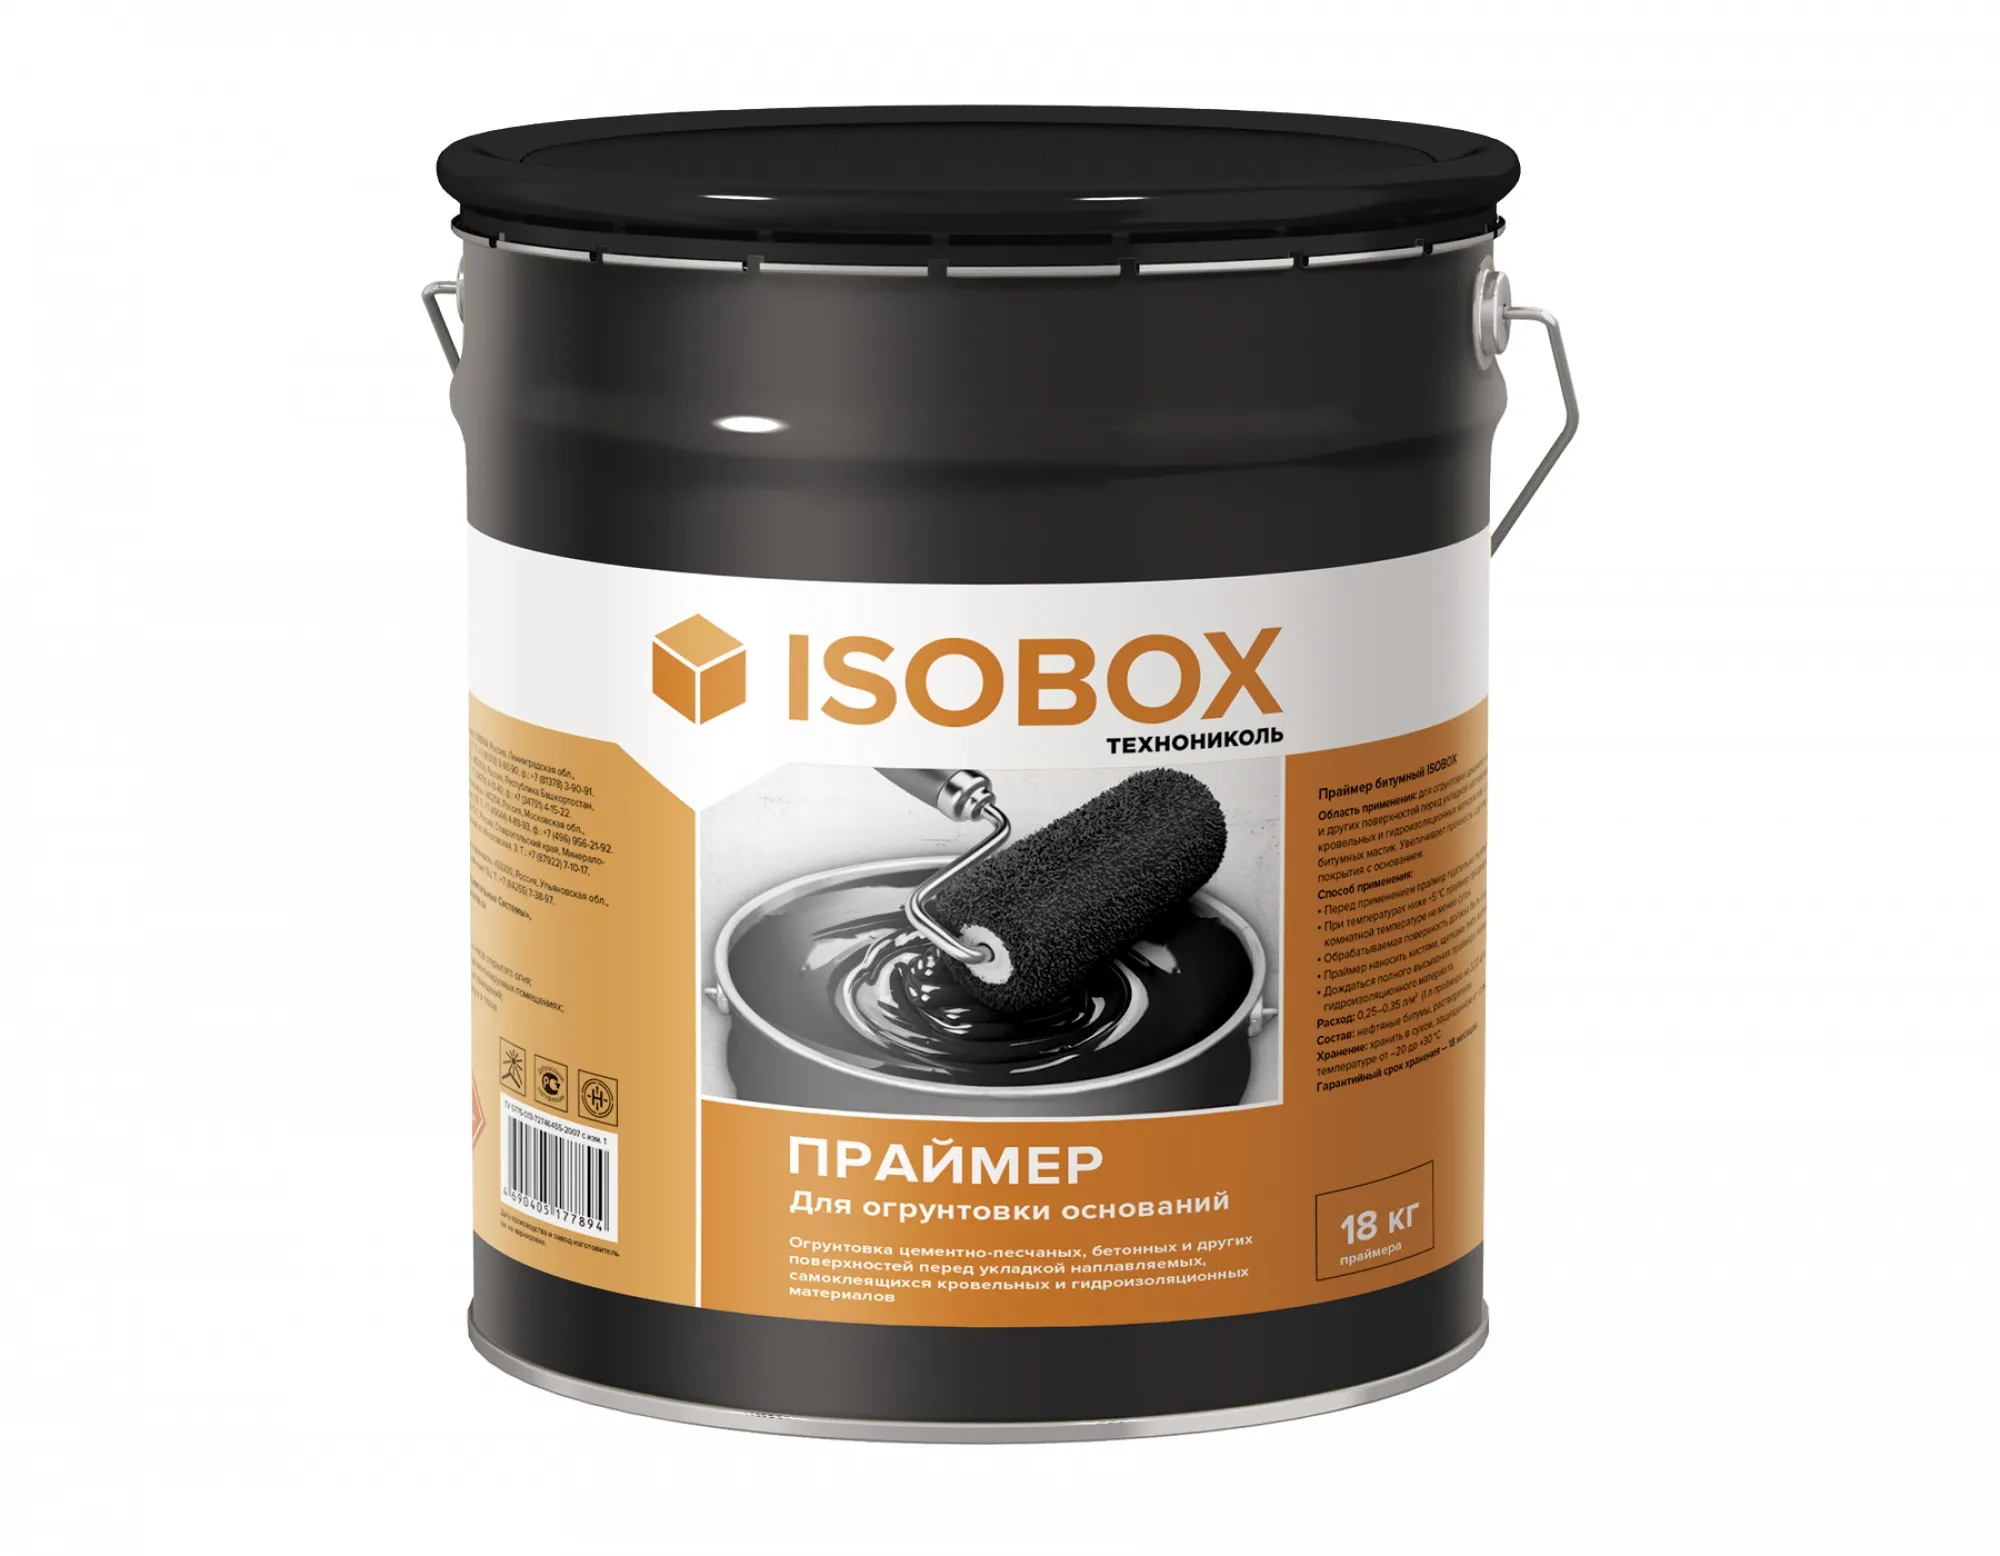 Праймер битумный ISOBOX 18 кг. Мастика кровельная ISOBOX, ведро 22 л. Мастика Изобокс ТЕХНОНИКОЛЬ 22 кг. Праймер битумный ISOBOX ТЕХНОНИКОЛЬ 18 кг.